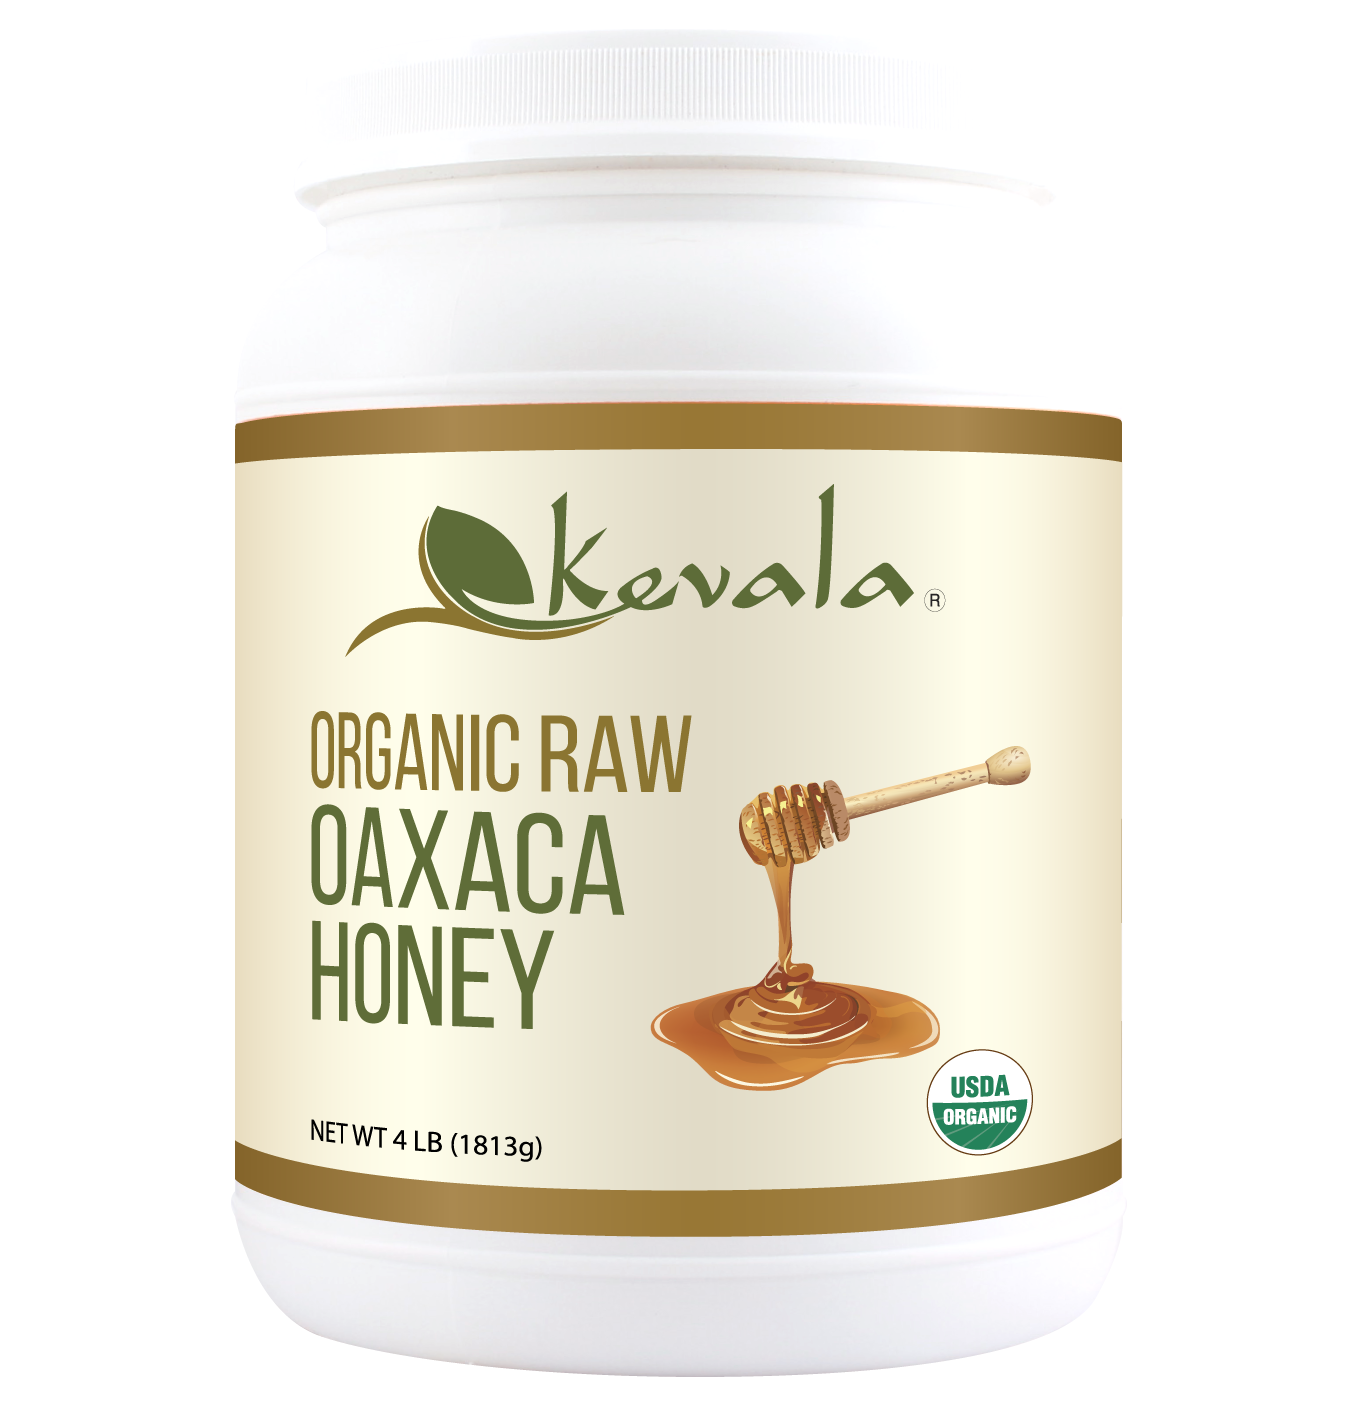 Organic Raw Oaxaca Honey 4 lb